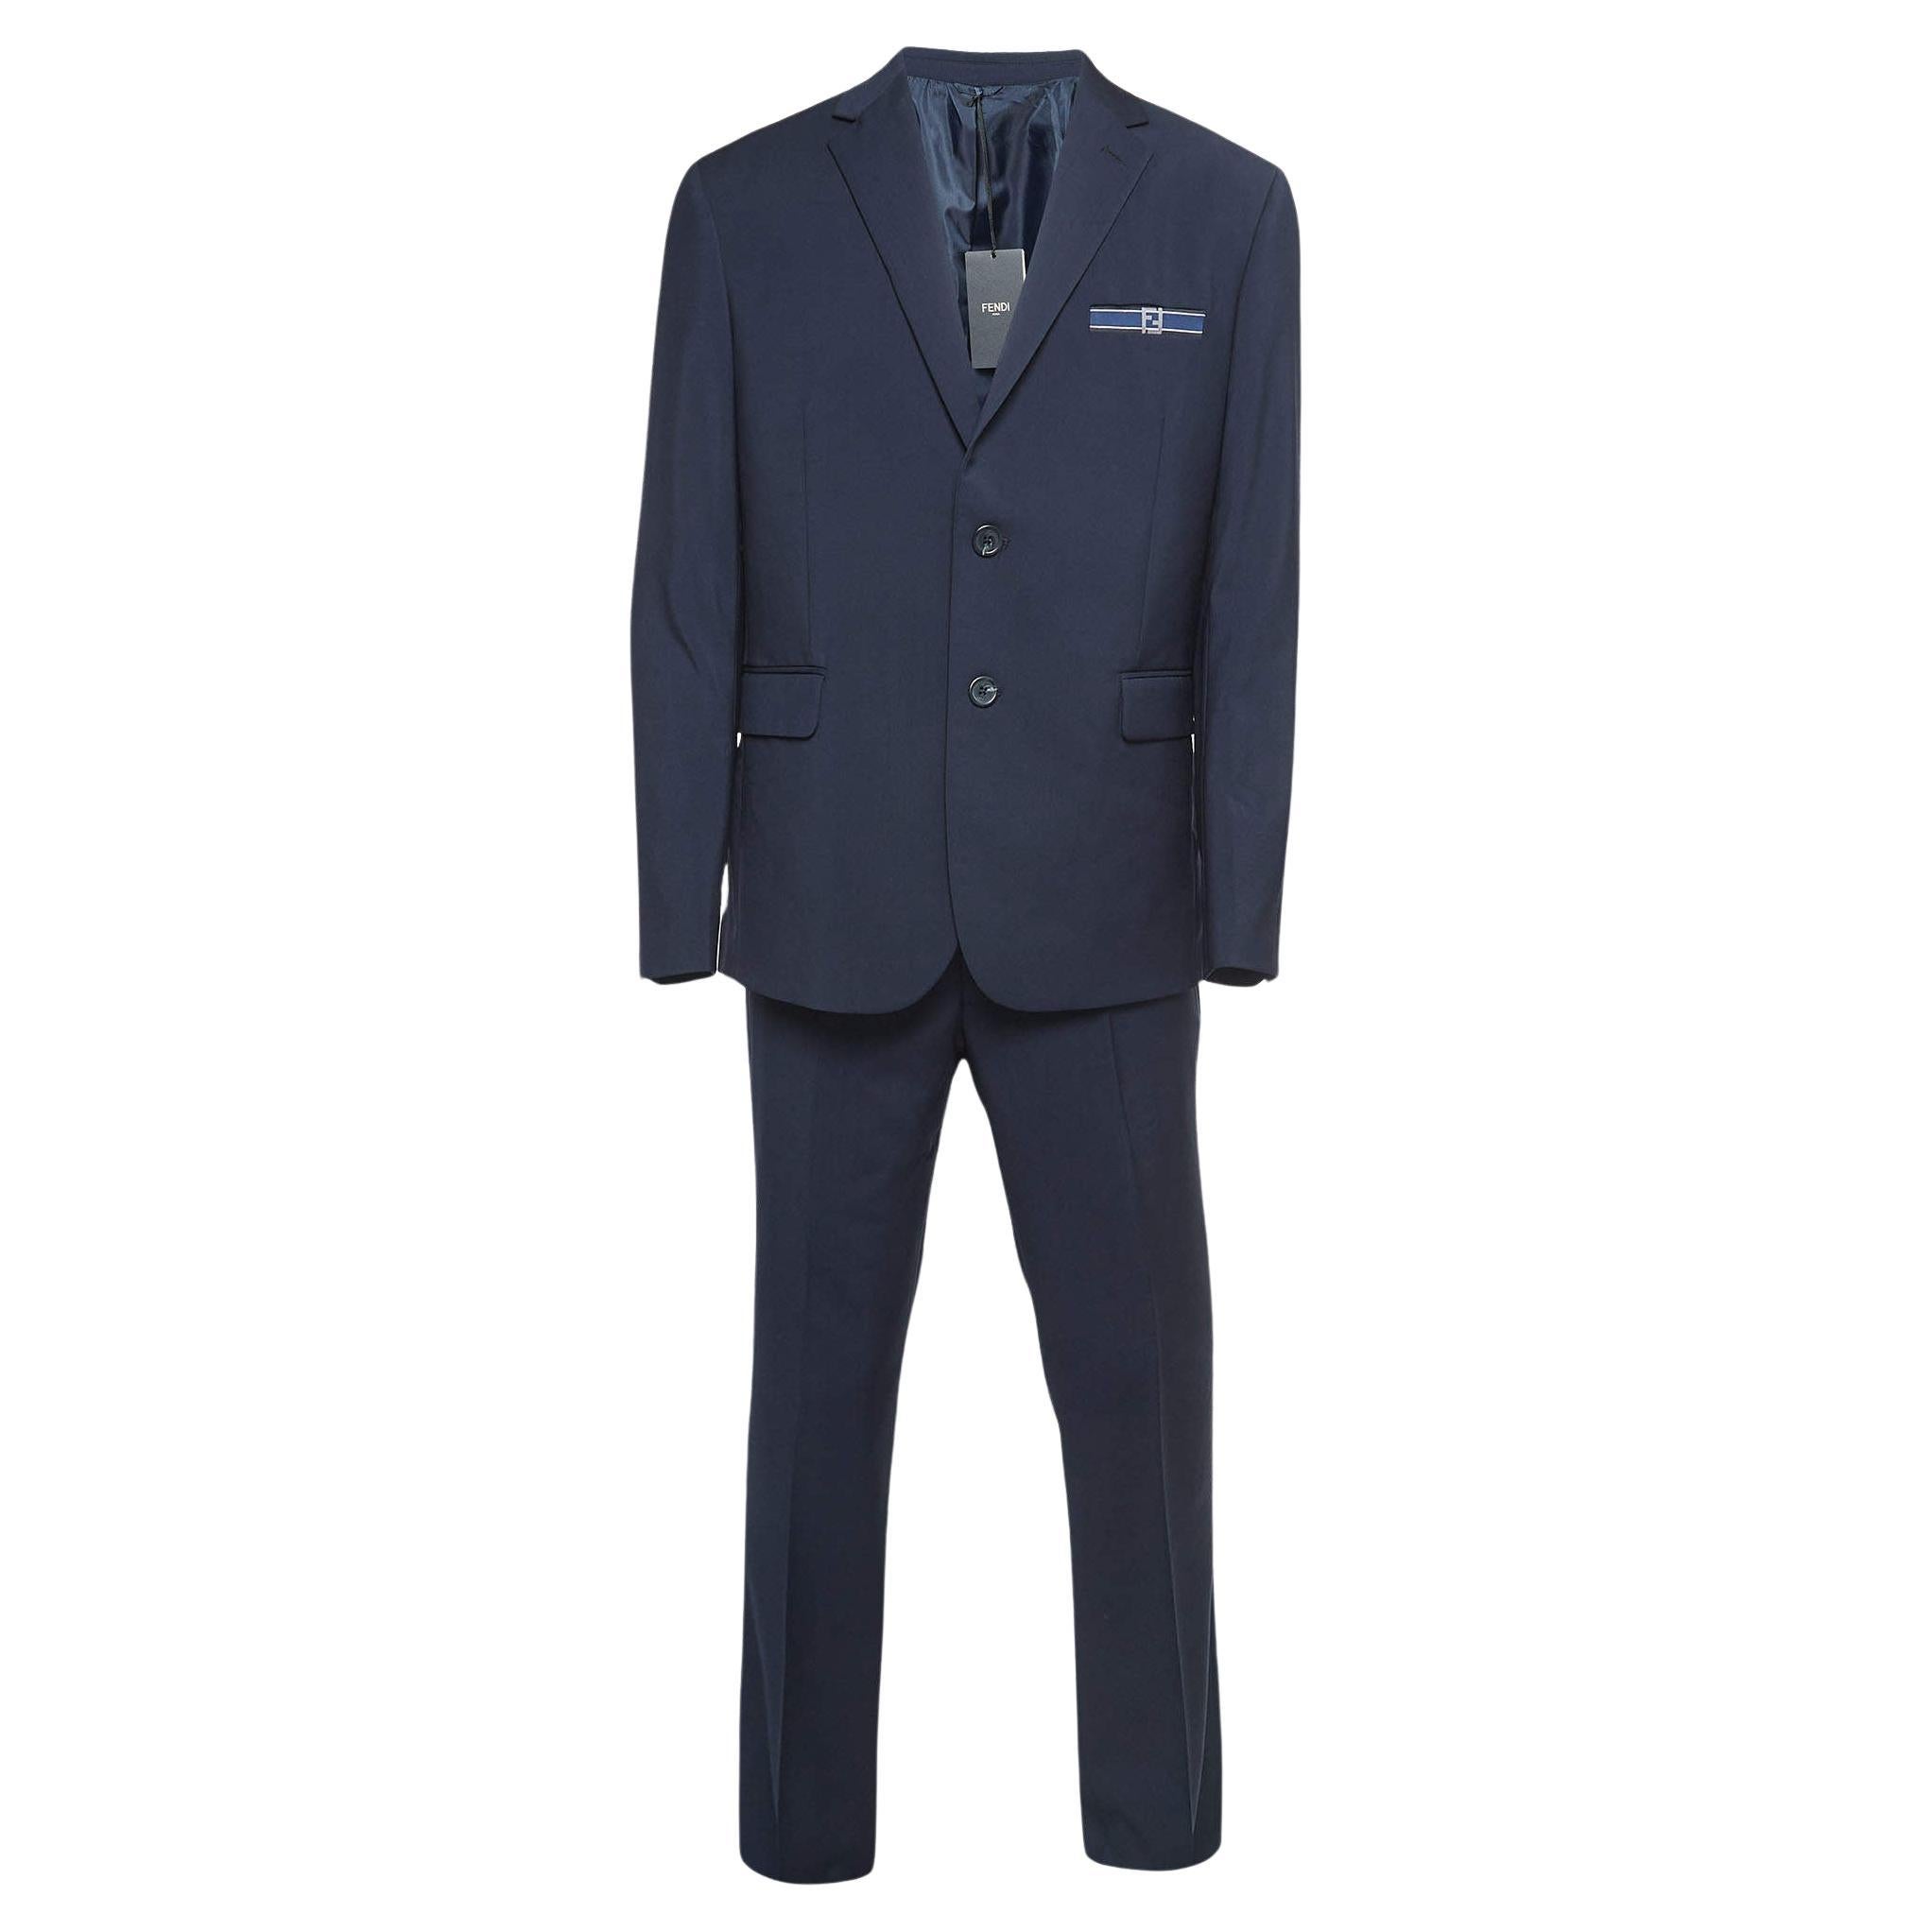 Fendi Navy Blue Wool Single Breasted Suit L